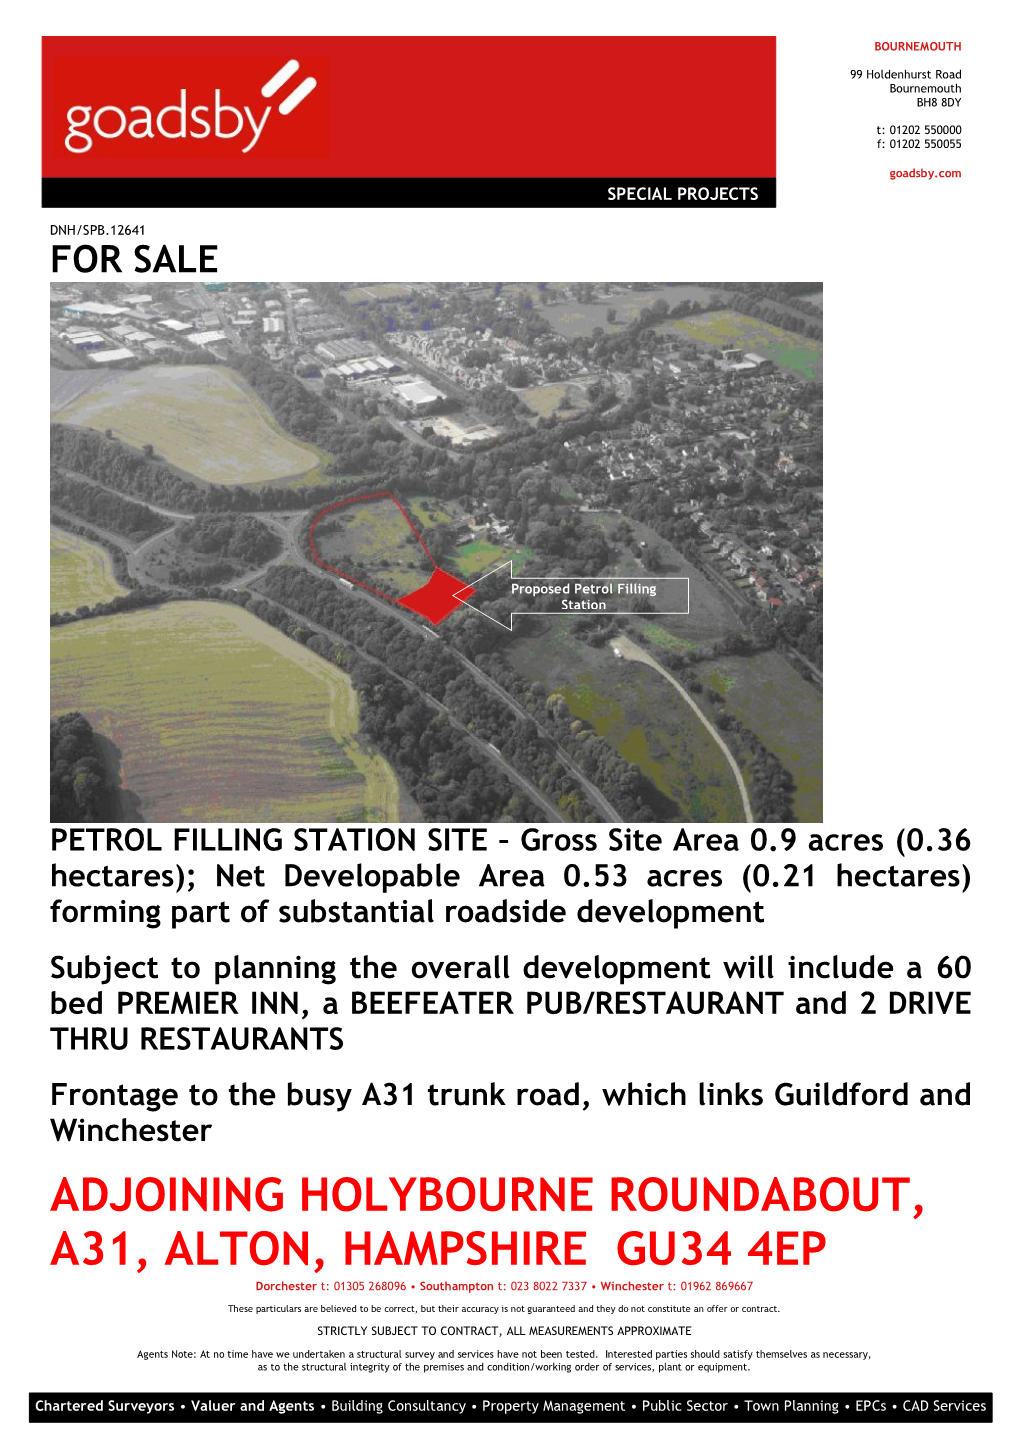 Adjoining Holybourne Roundabout, A31, Alton, Hampshire Gu34 4Ep